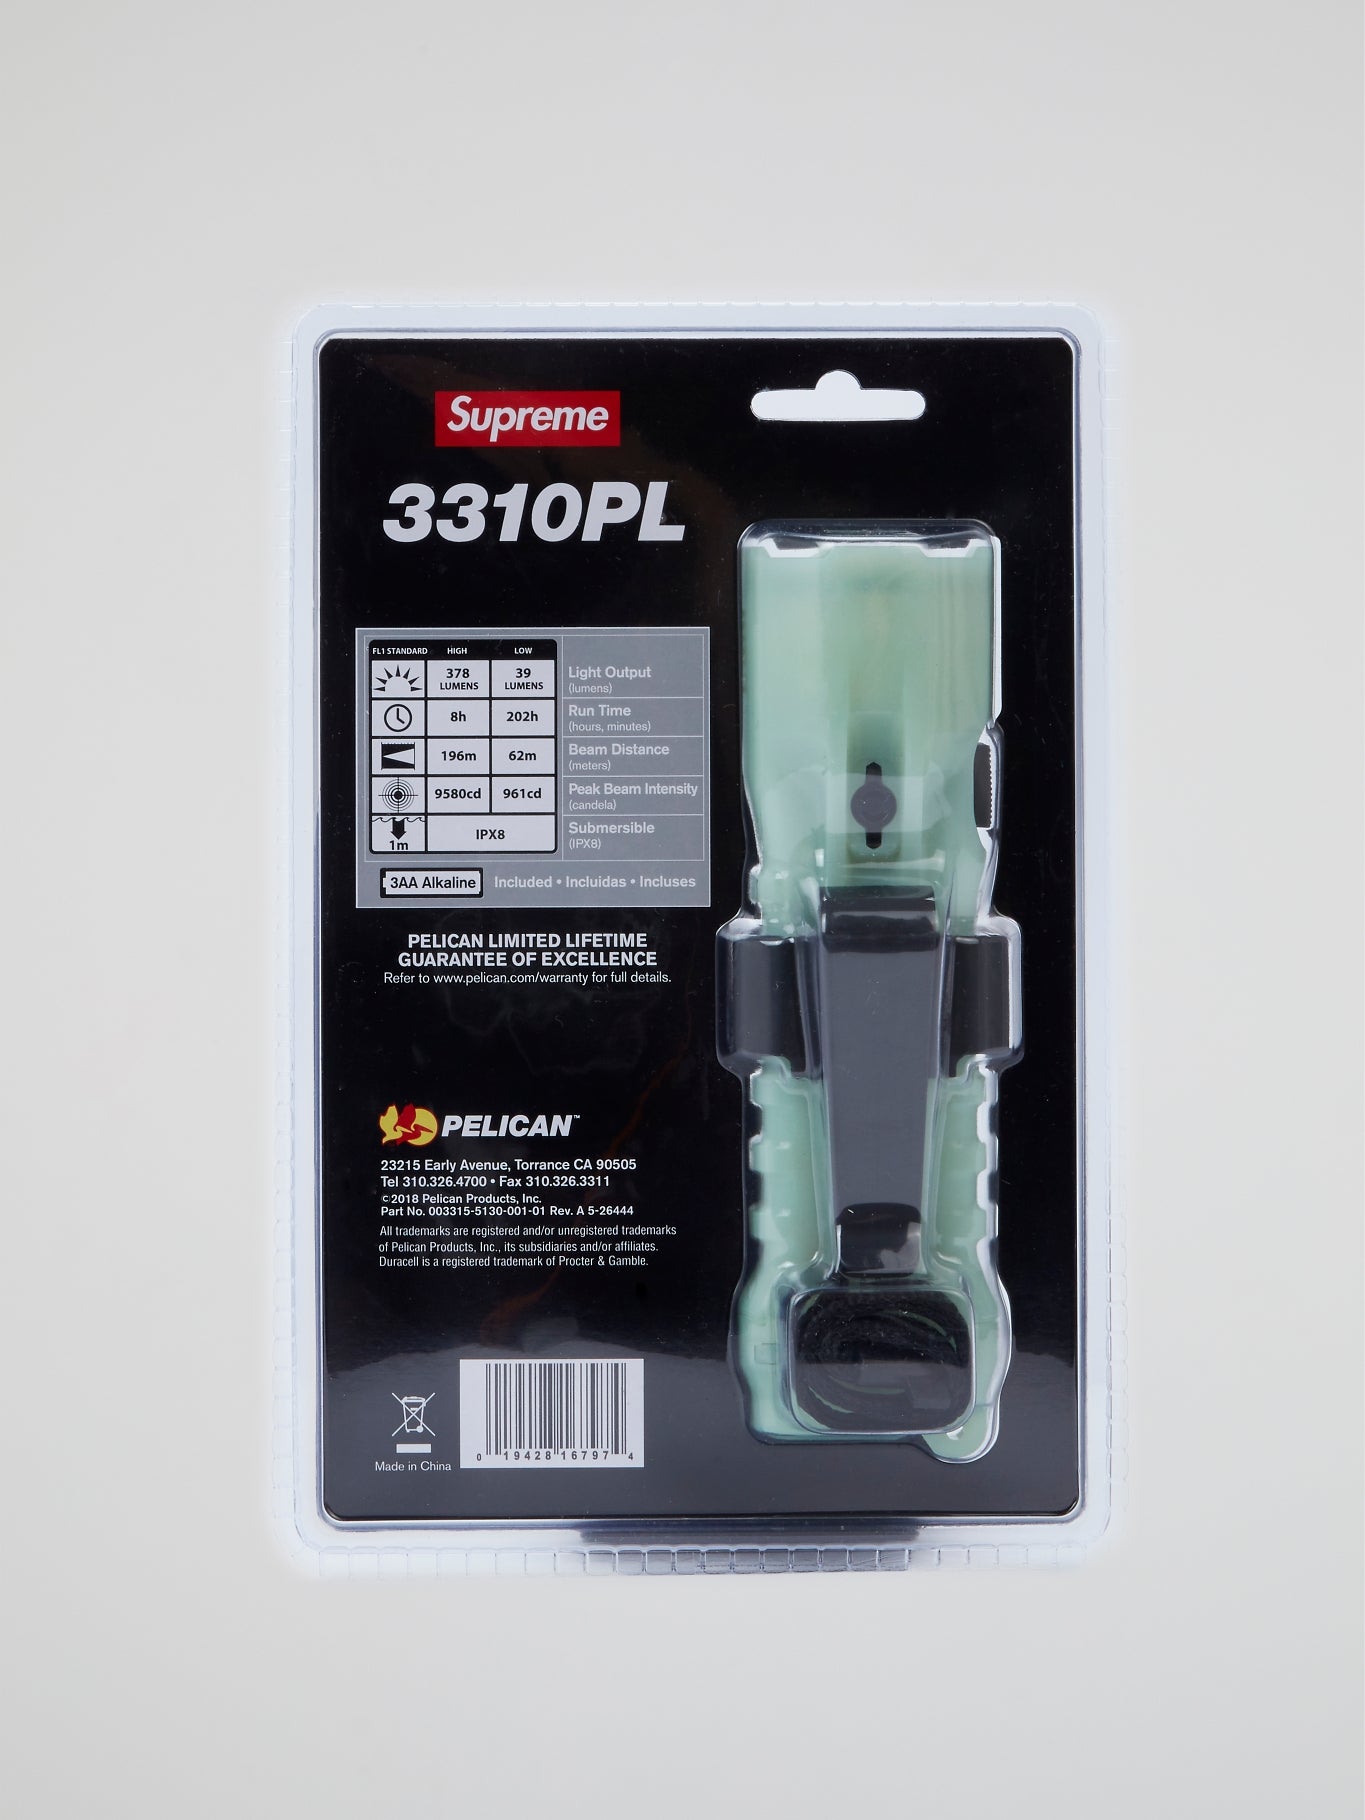 Supreme x Pelican Green 3310PL Flashlight